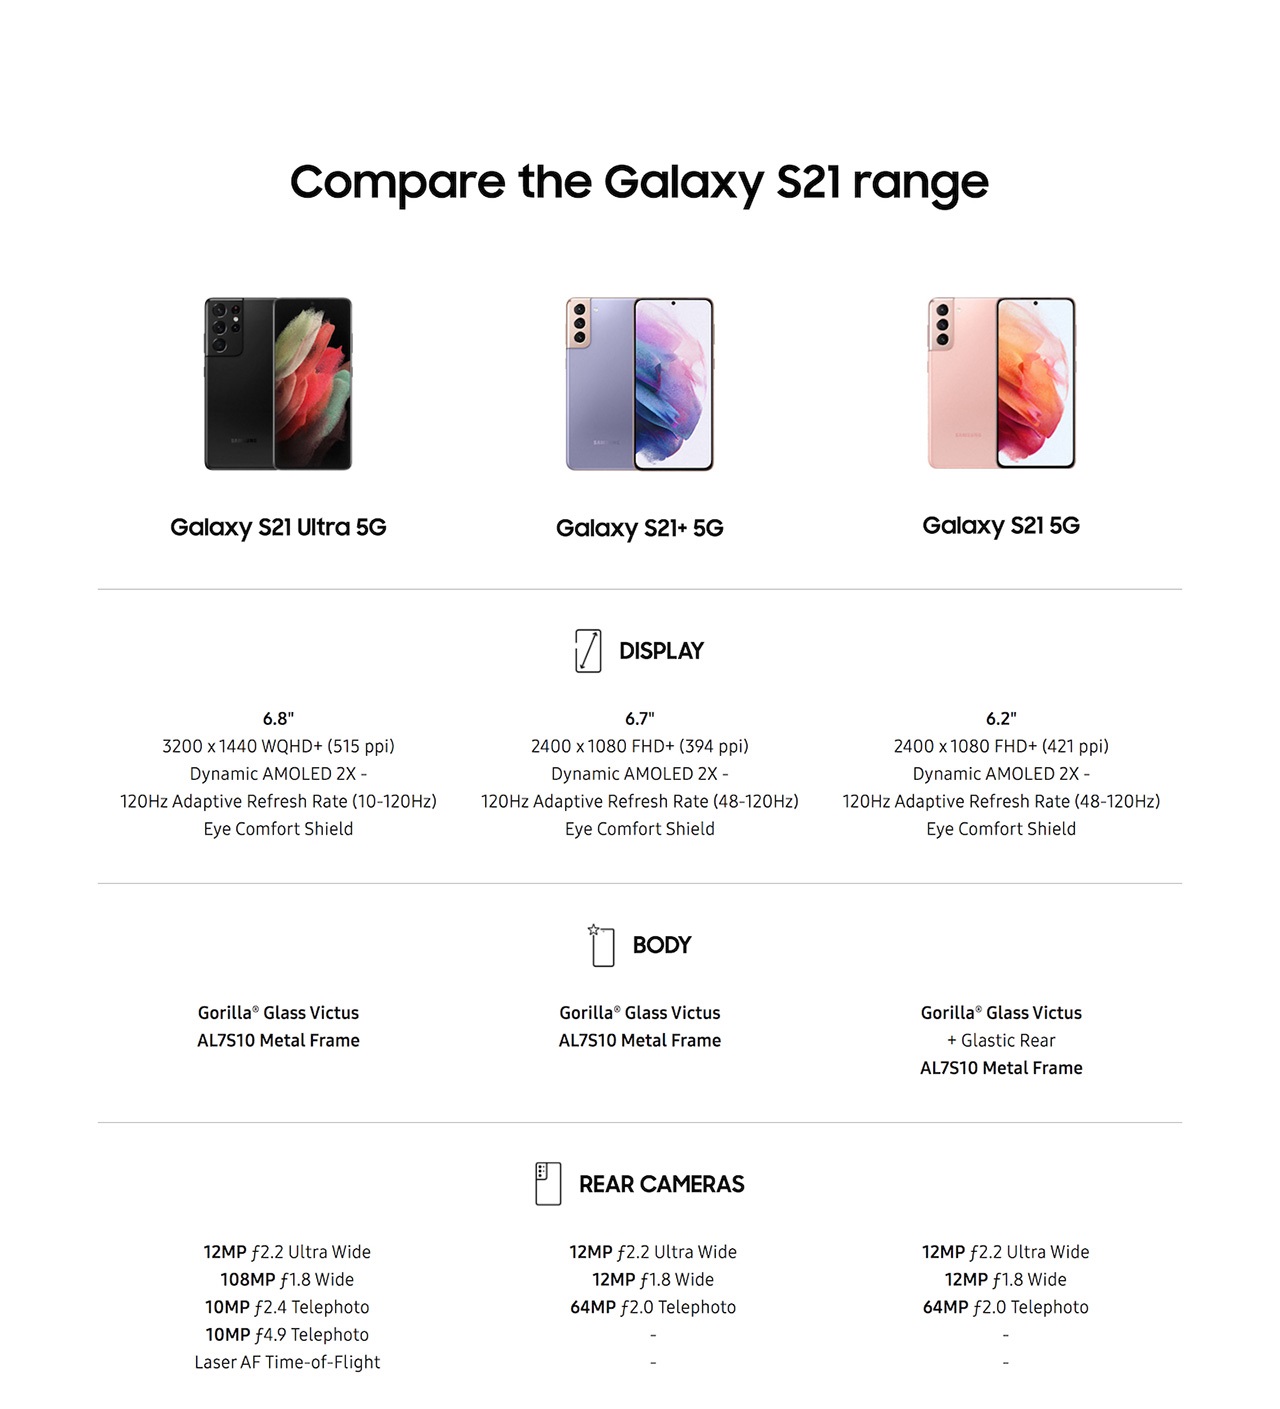 The Samsung Galaxy S21